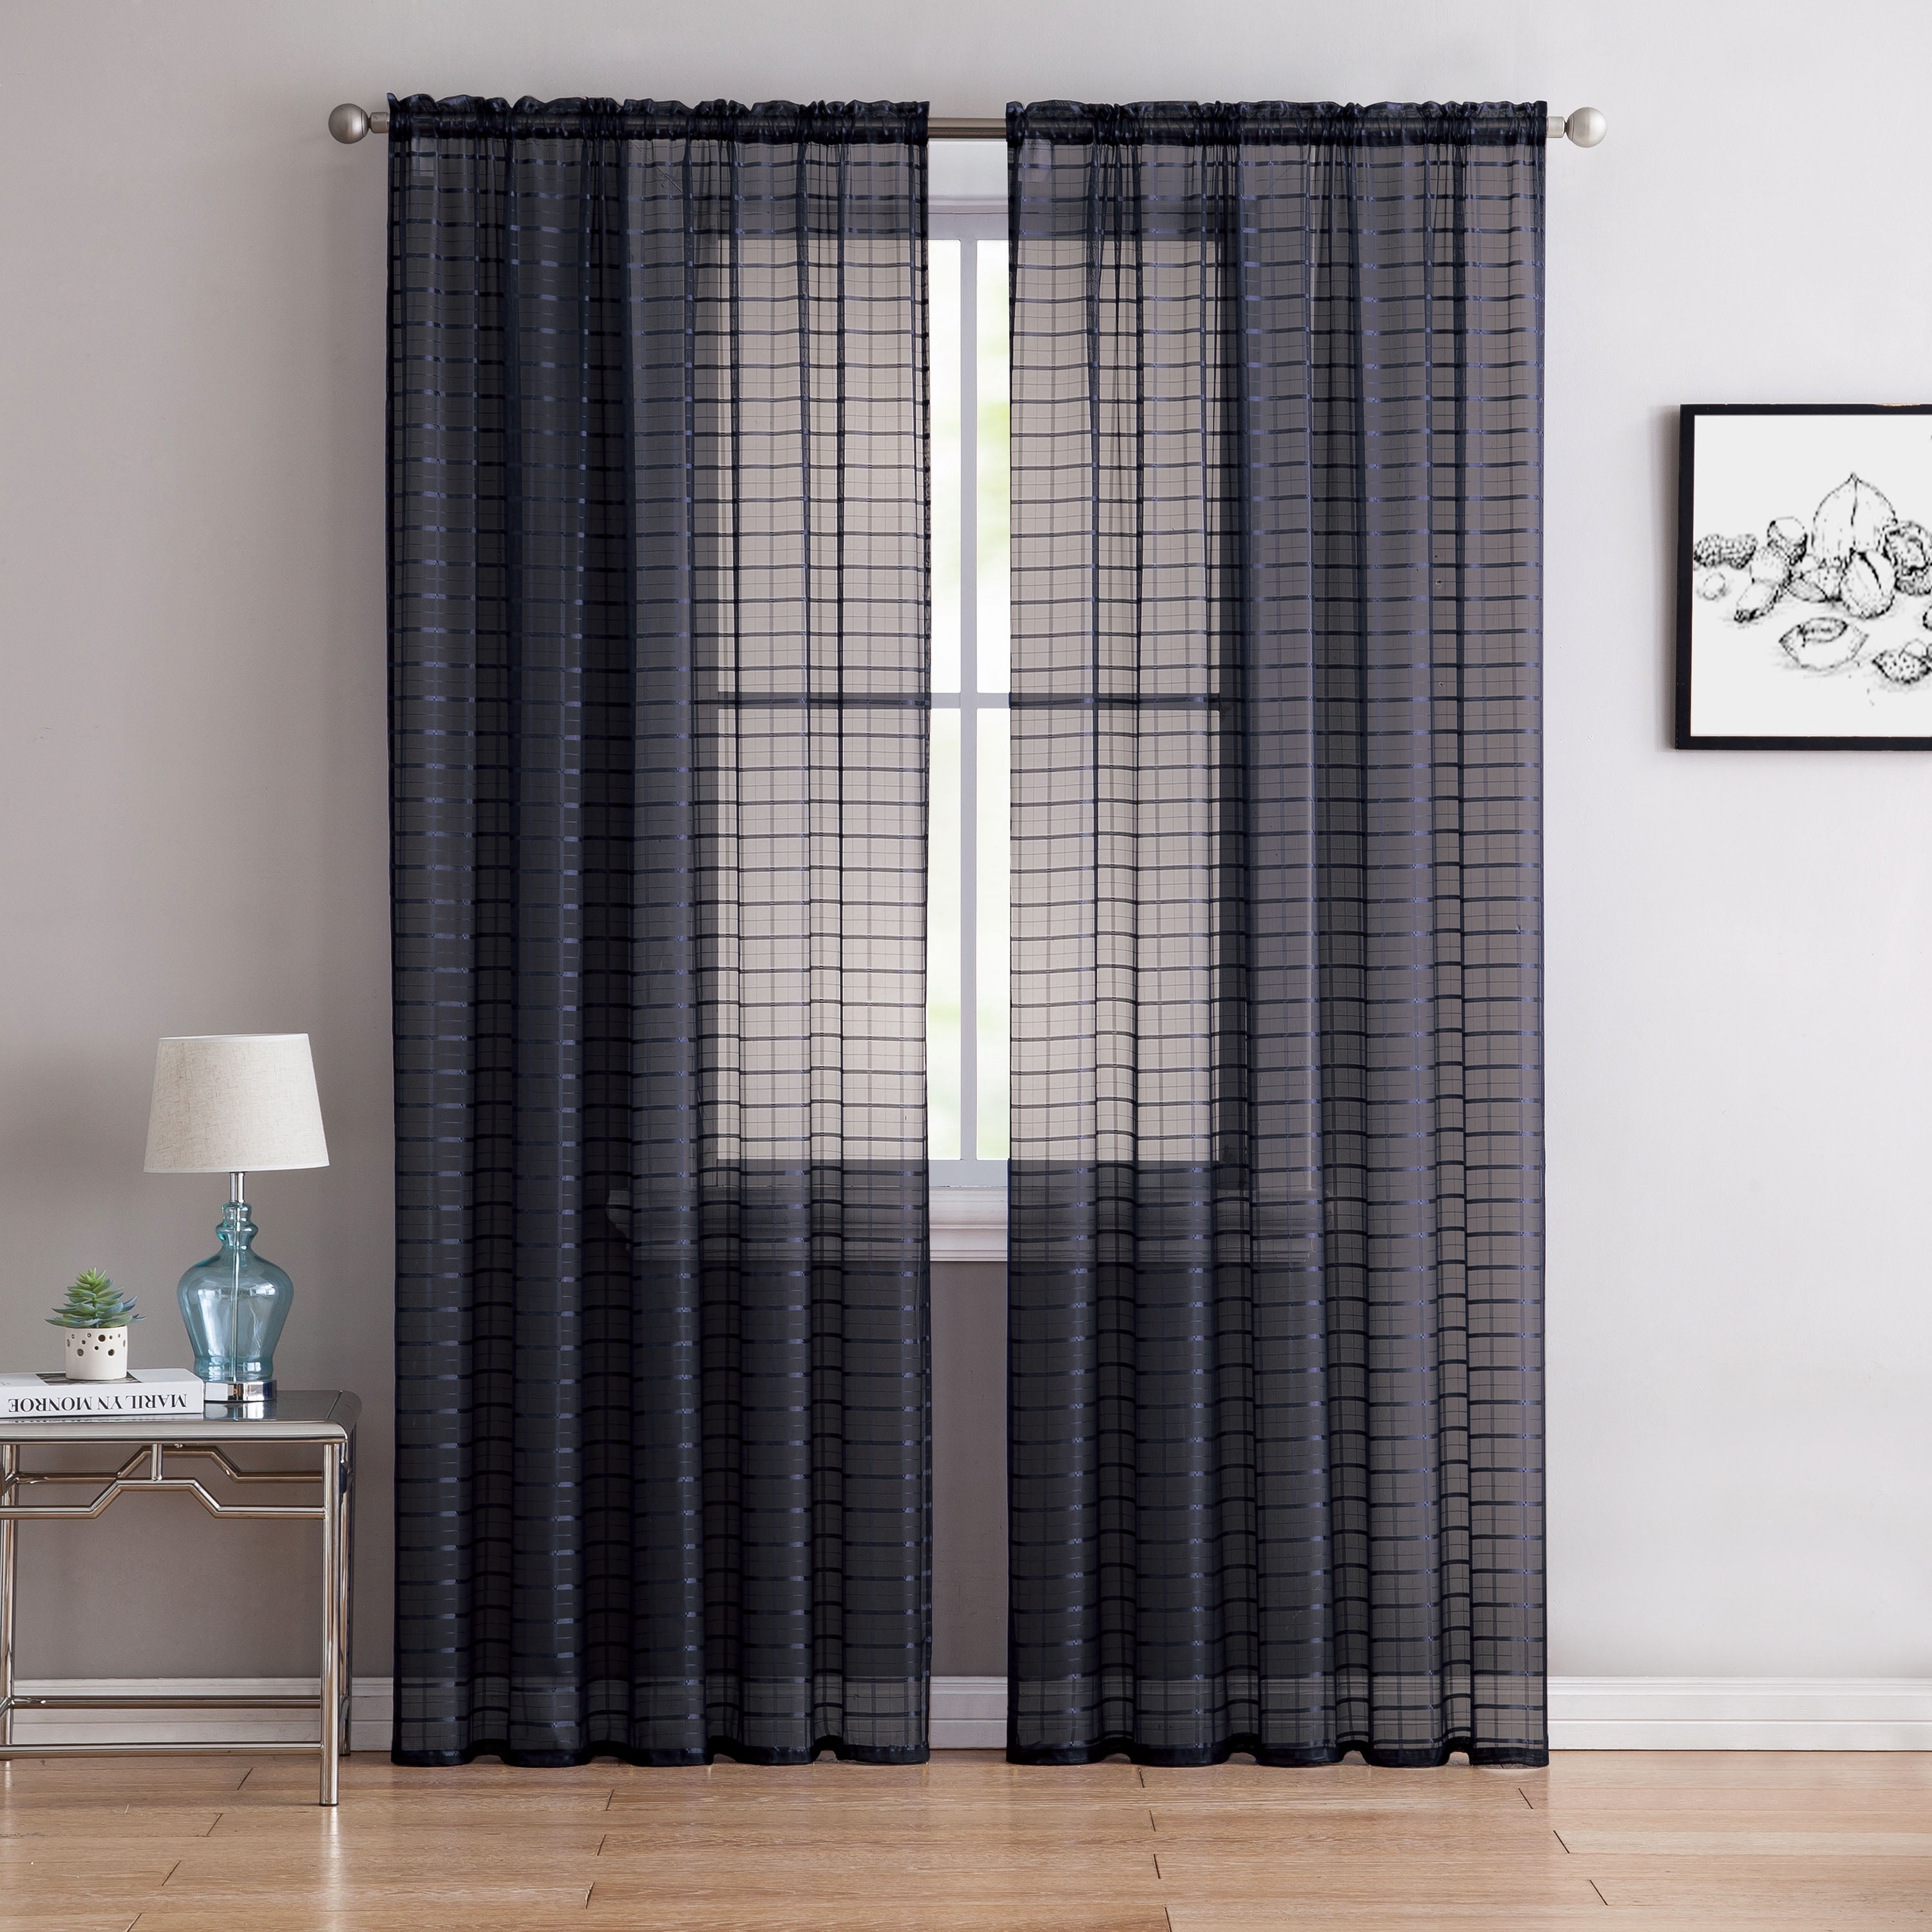 Single (1) Sheer Rod Pocket Window Curtain Panel 55" W X